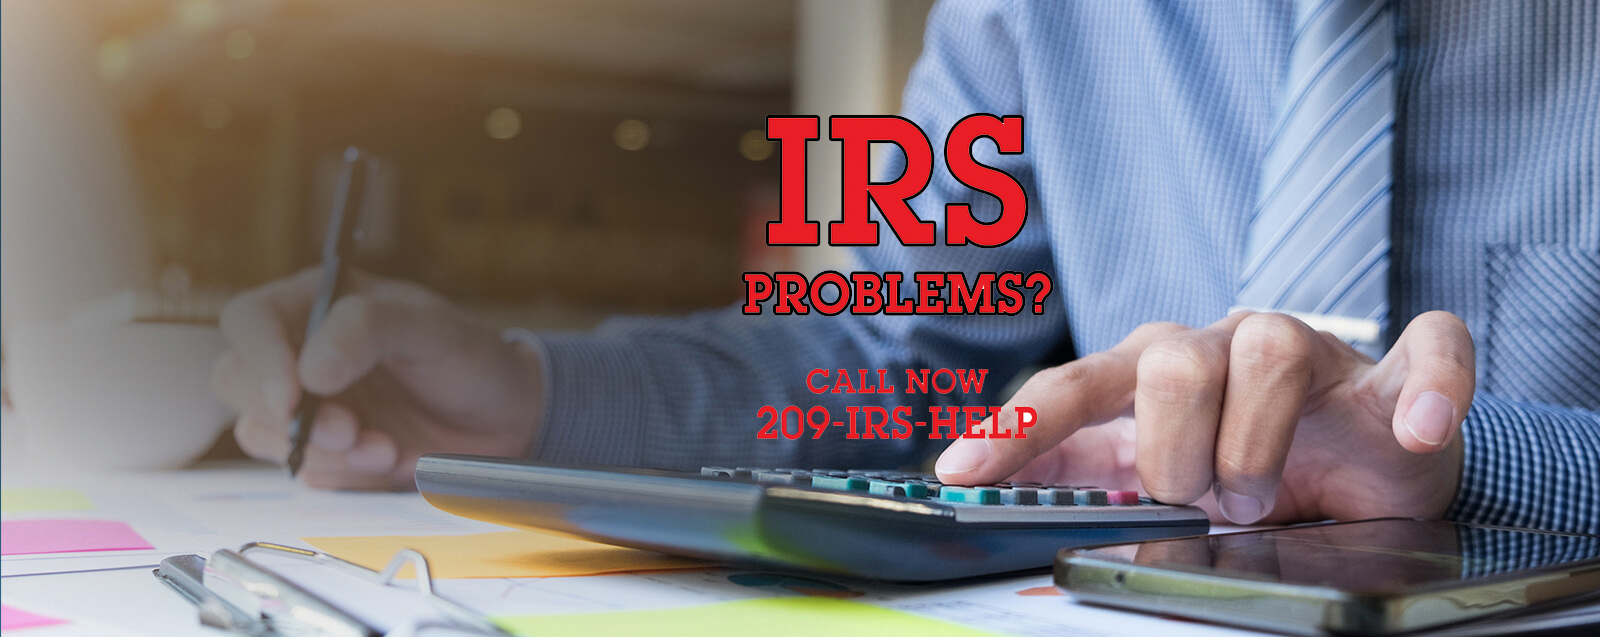 IRS proble s